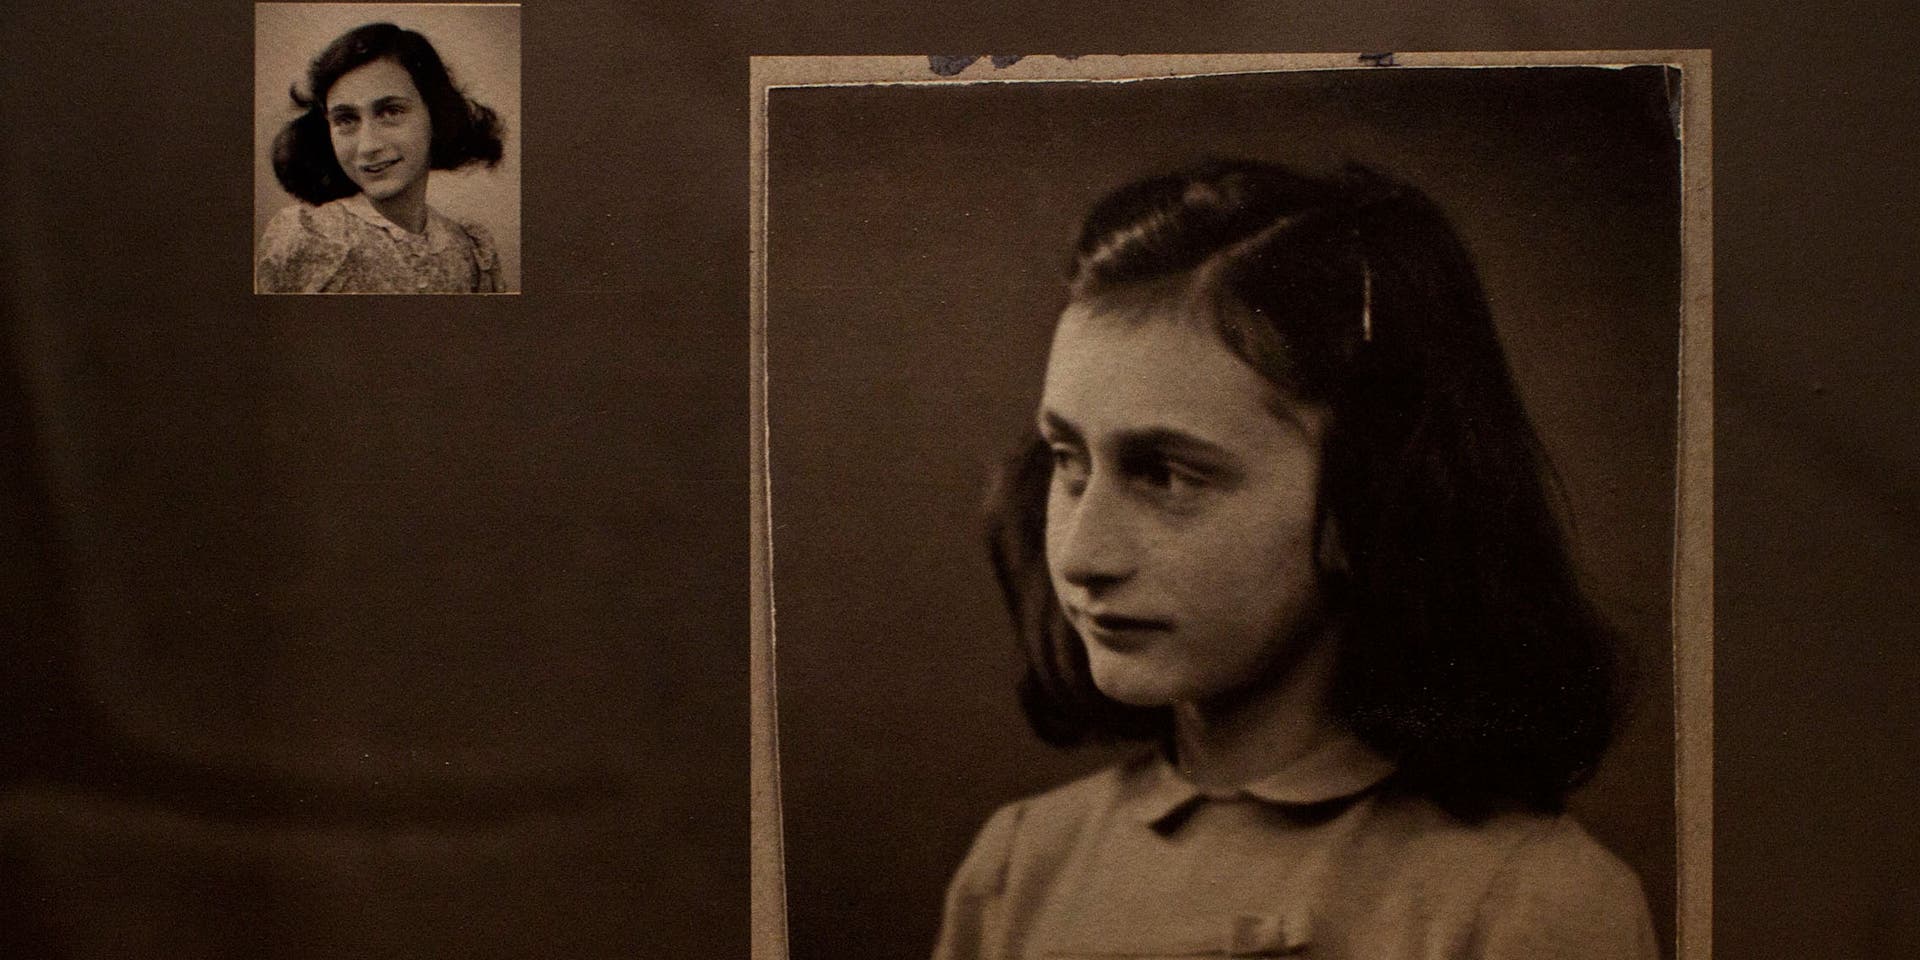 Anne Frank, the Holocaust